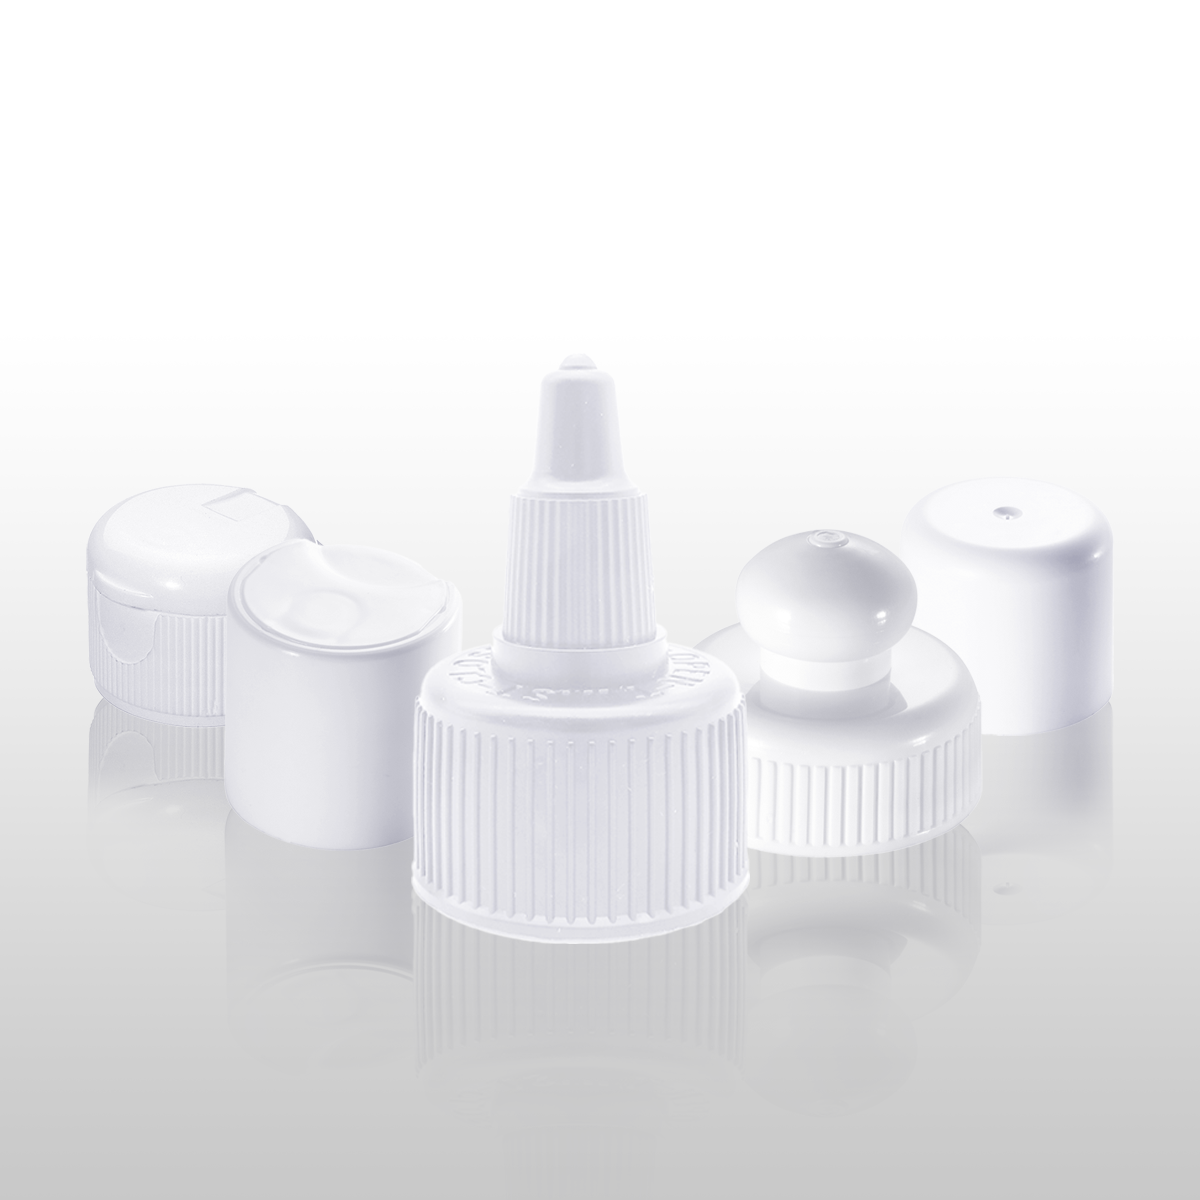 OEM/ODM Plastic Bottle Cap Suppliers